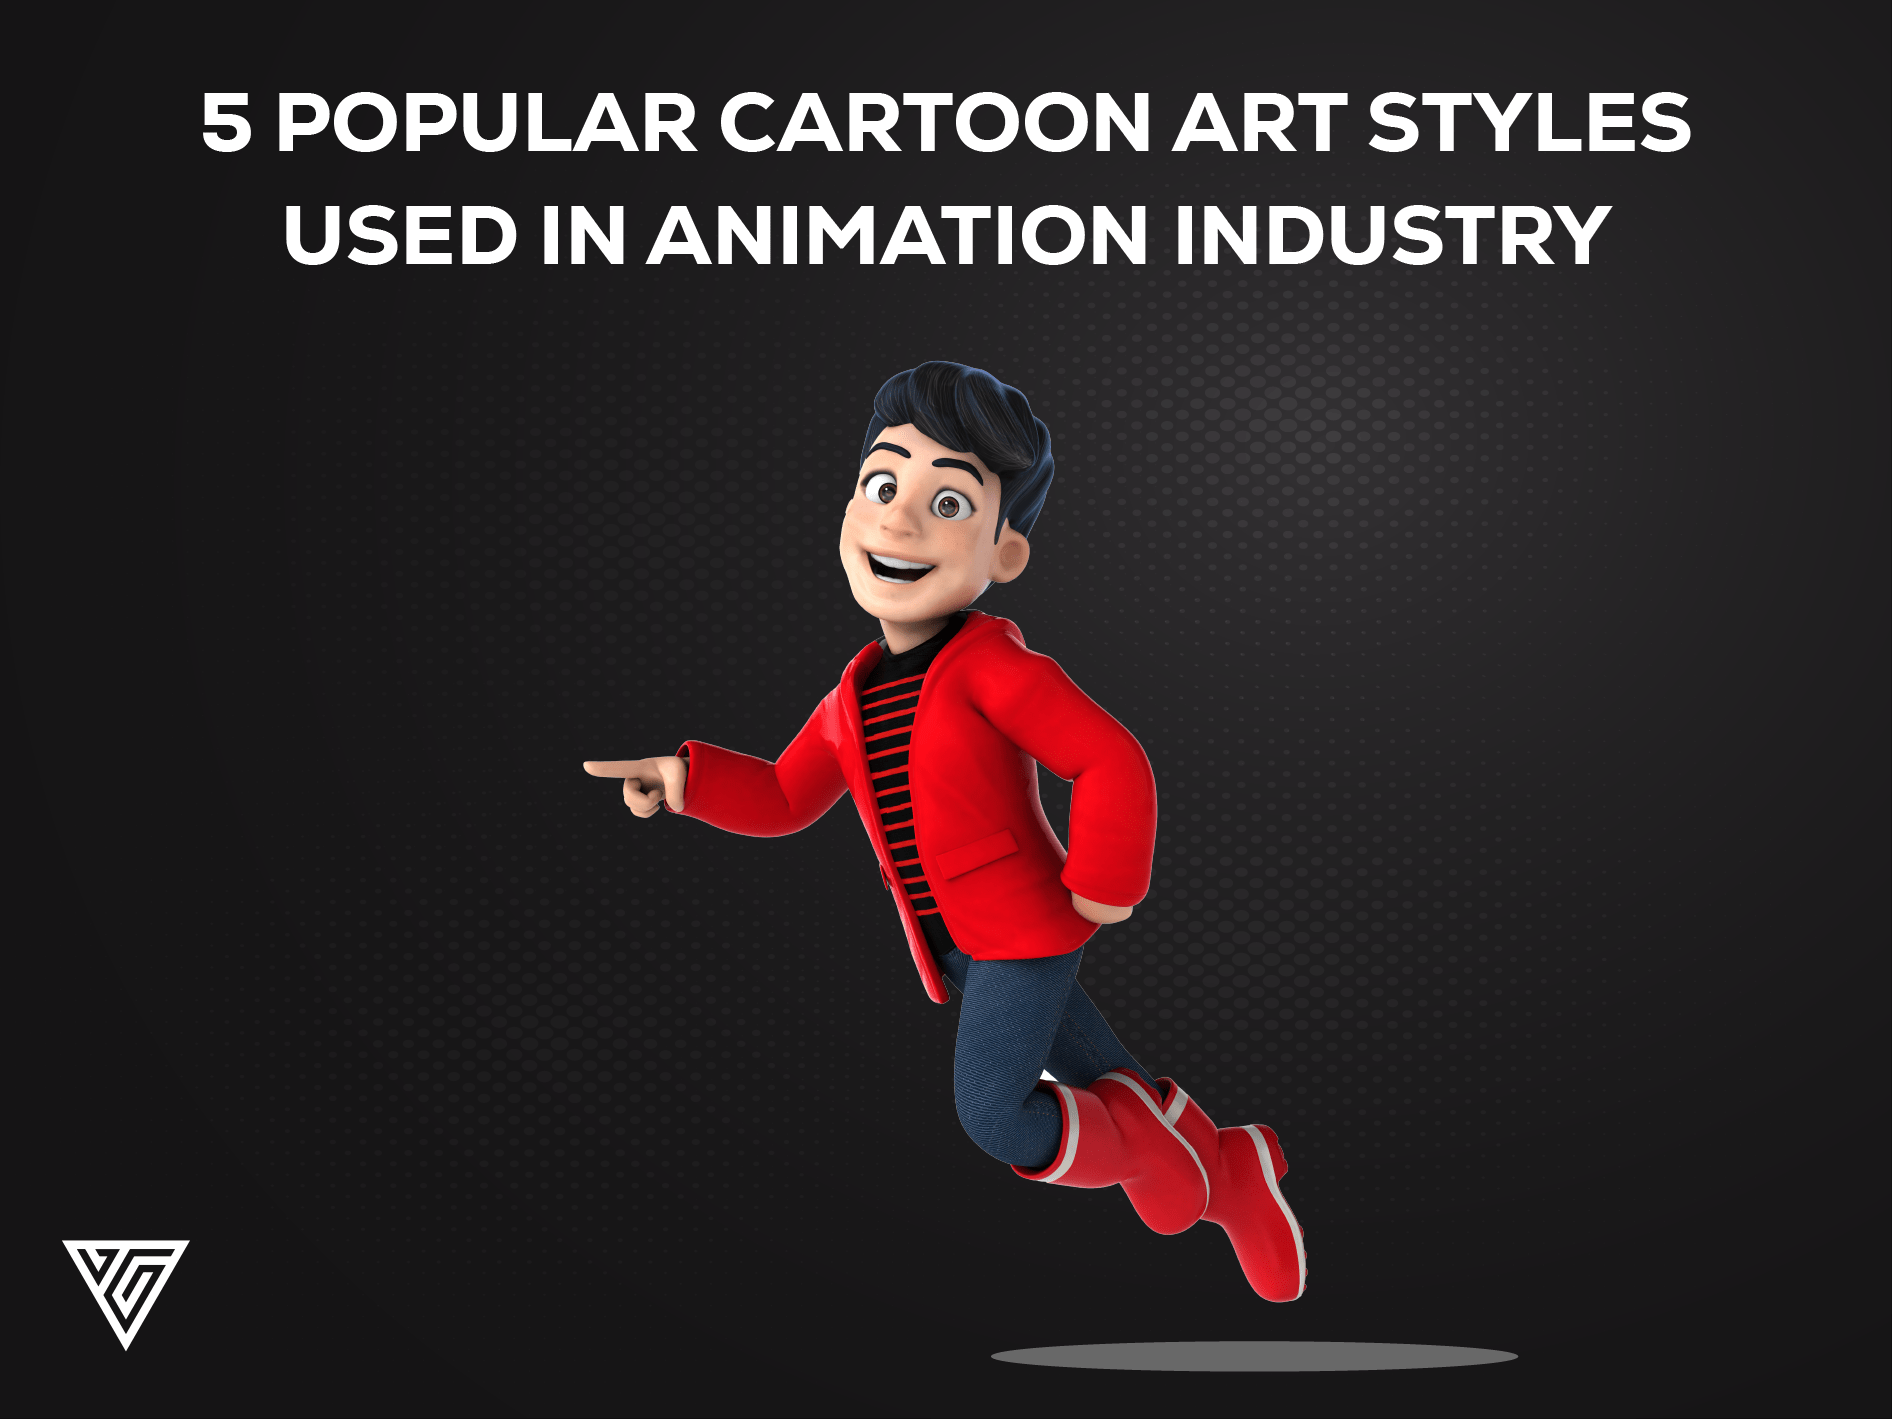 5 Popular Cartoon Art Styles Used in Animation